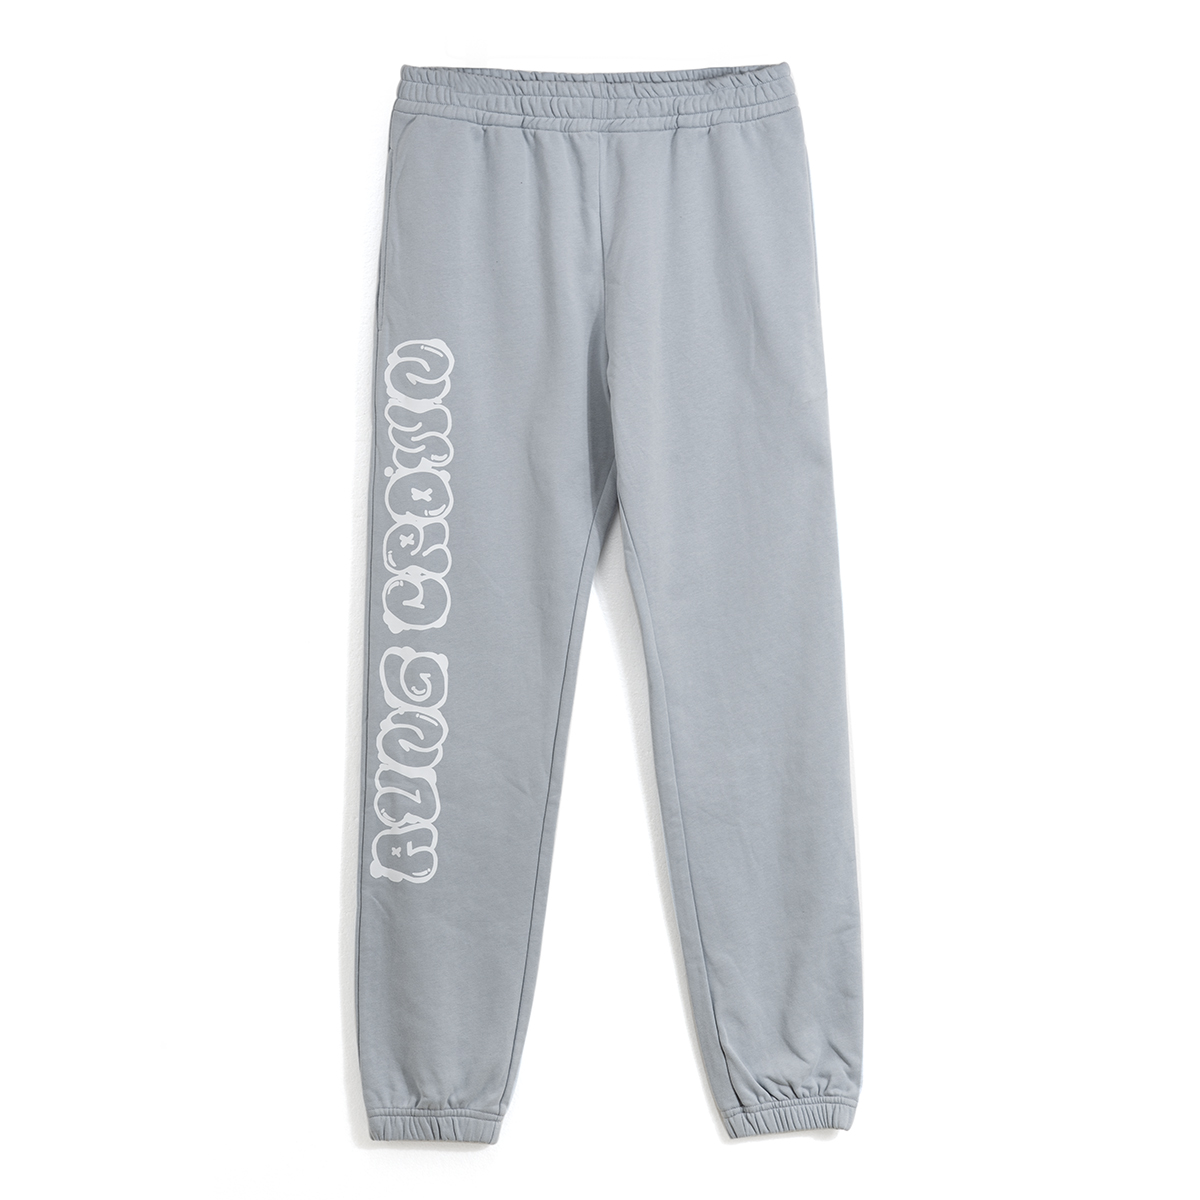 >AungCrown designed brand men’s athletic casual sweatpants